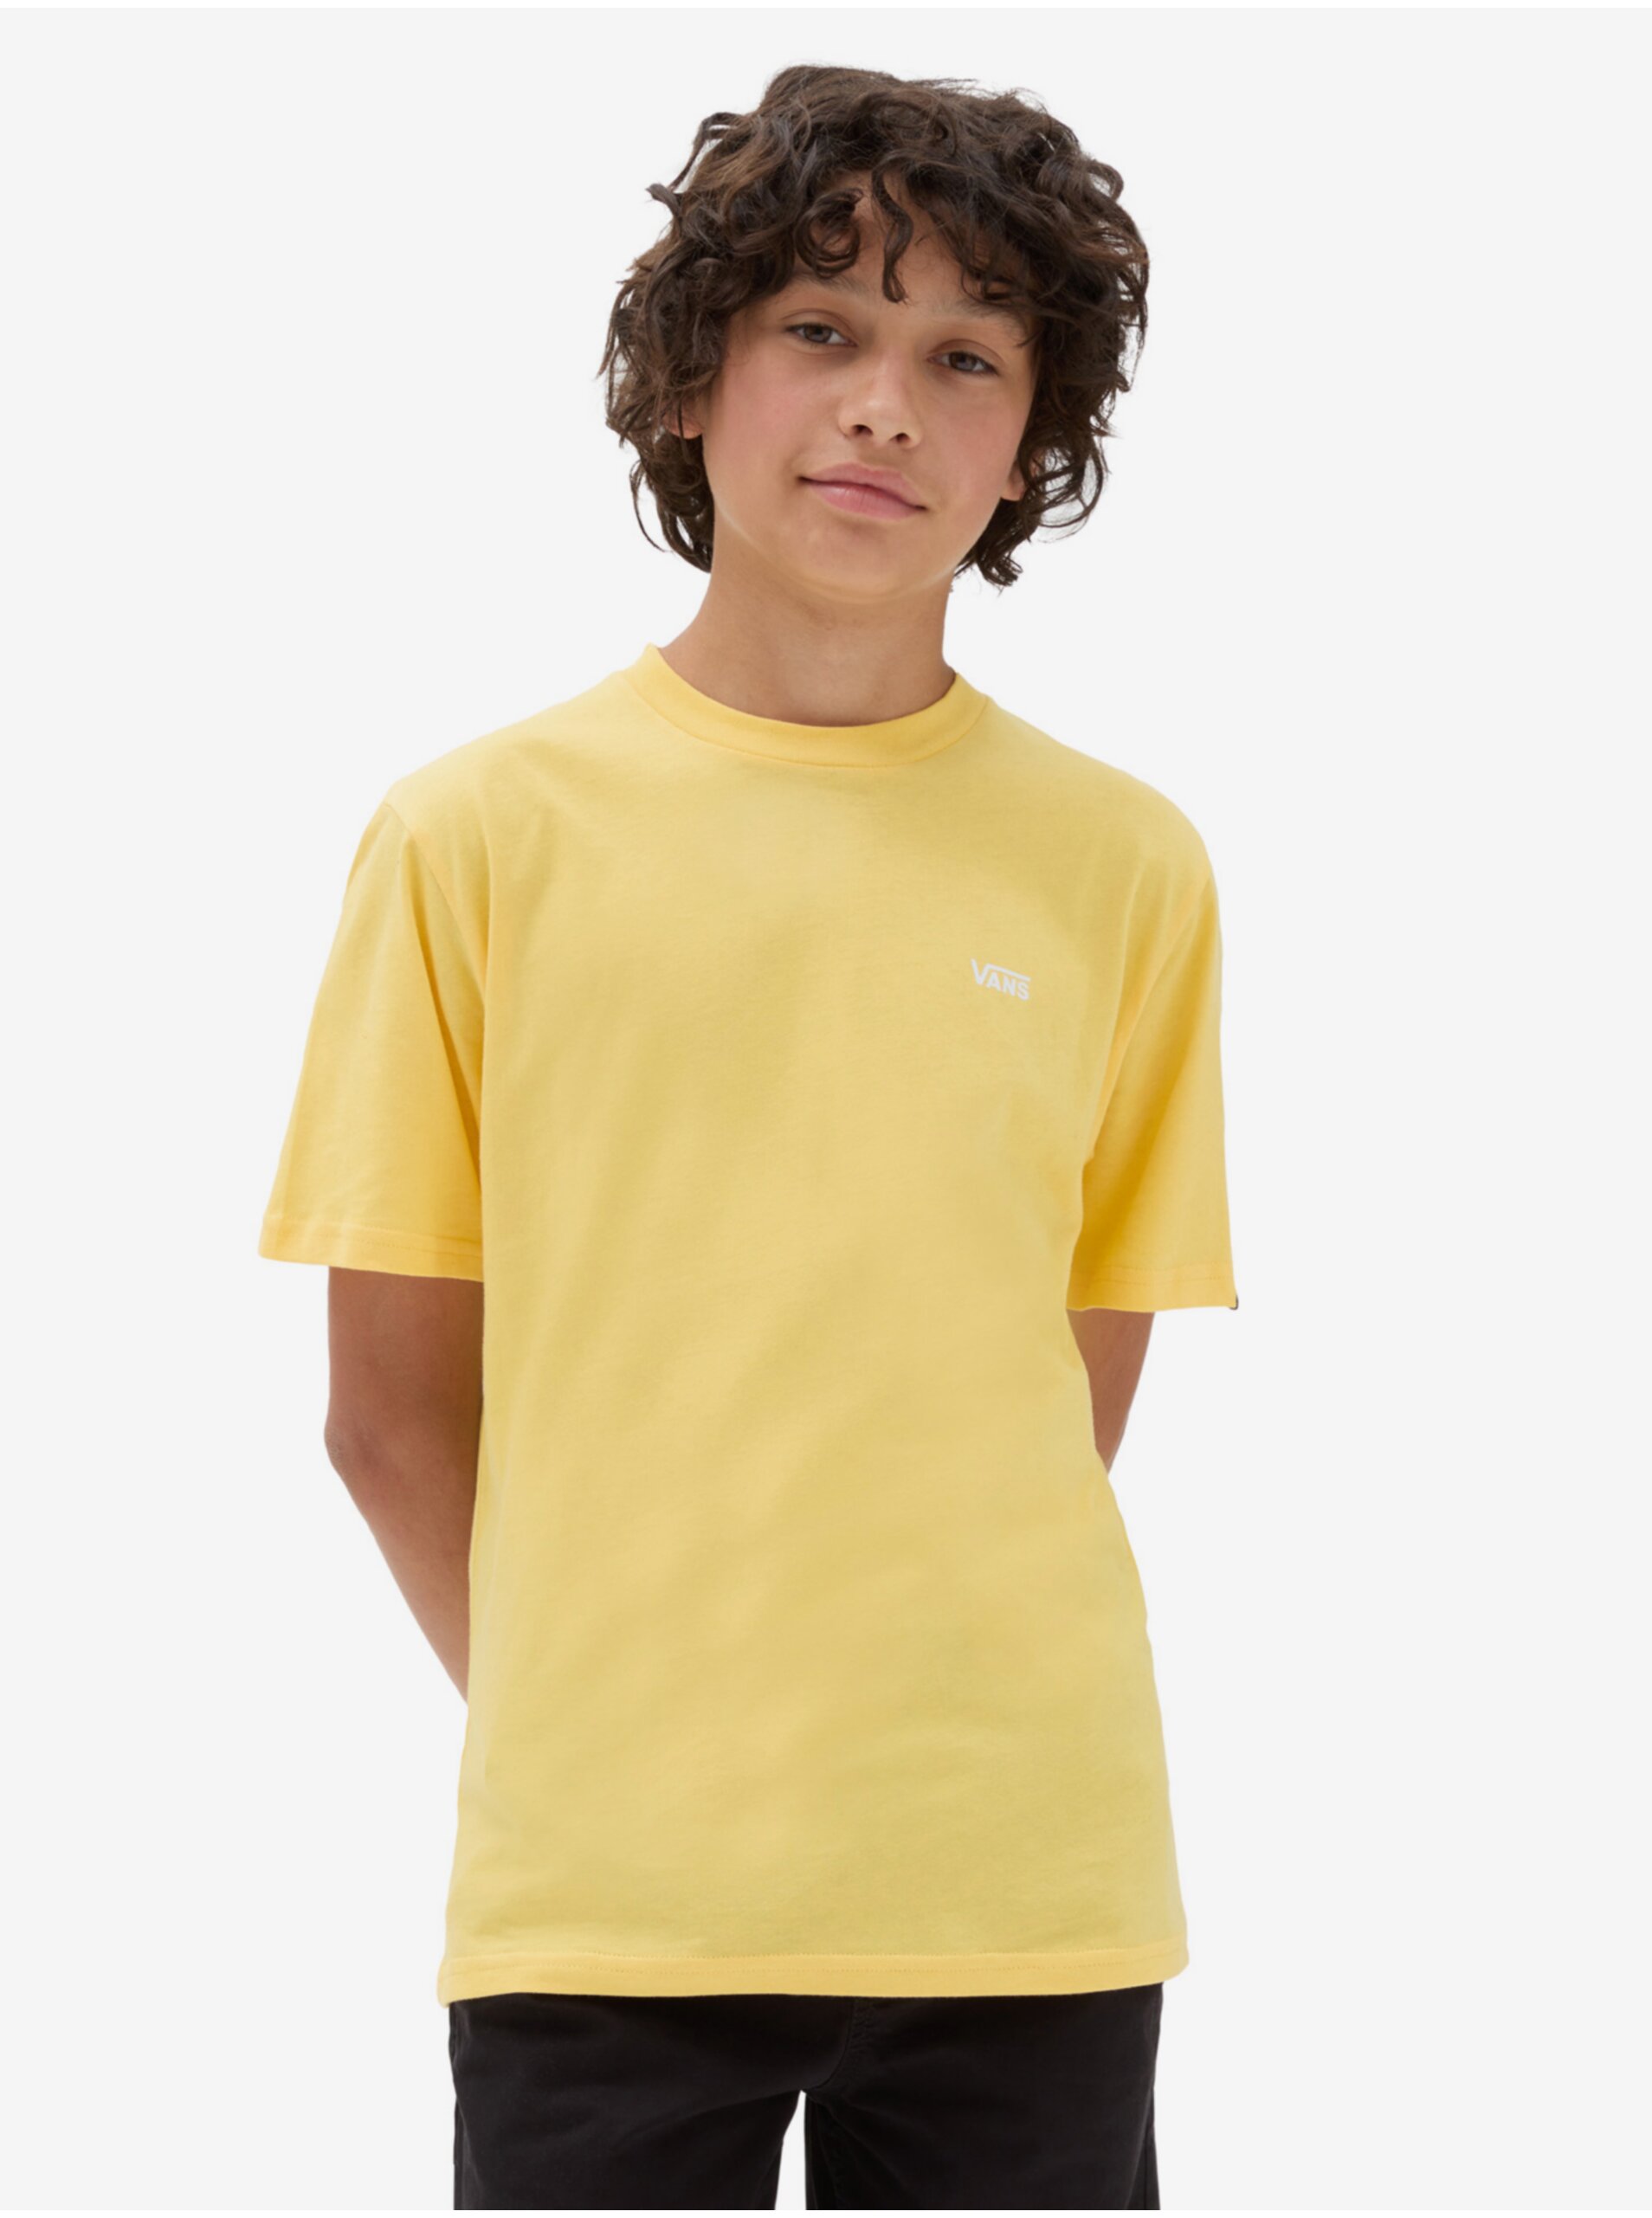 Yellow Boys' T-shirt VANS By Left Chest - Boys